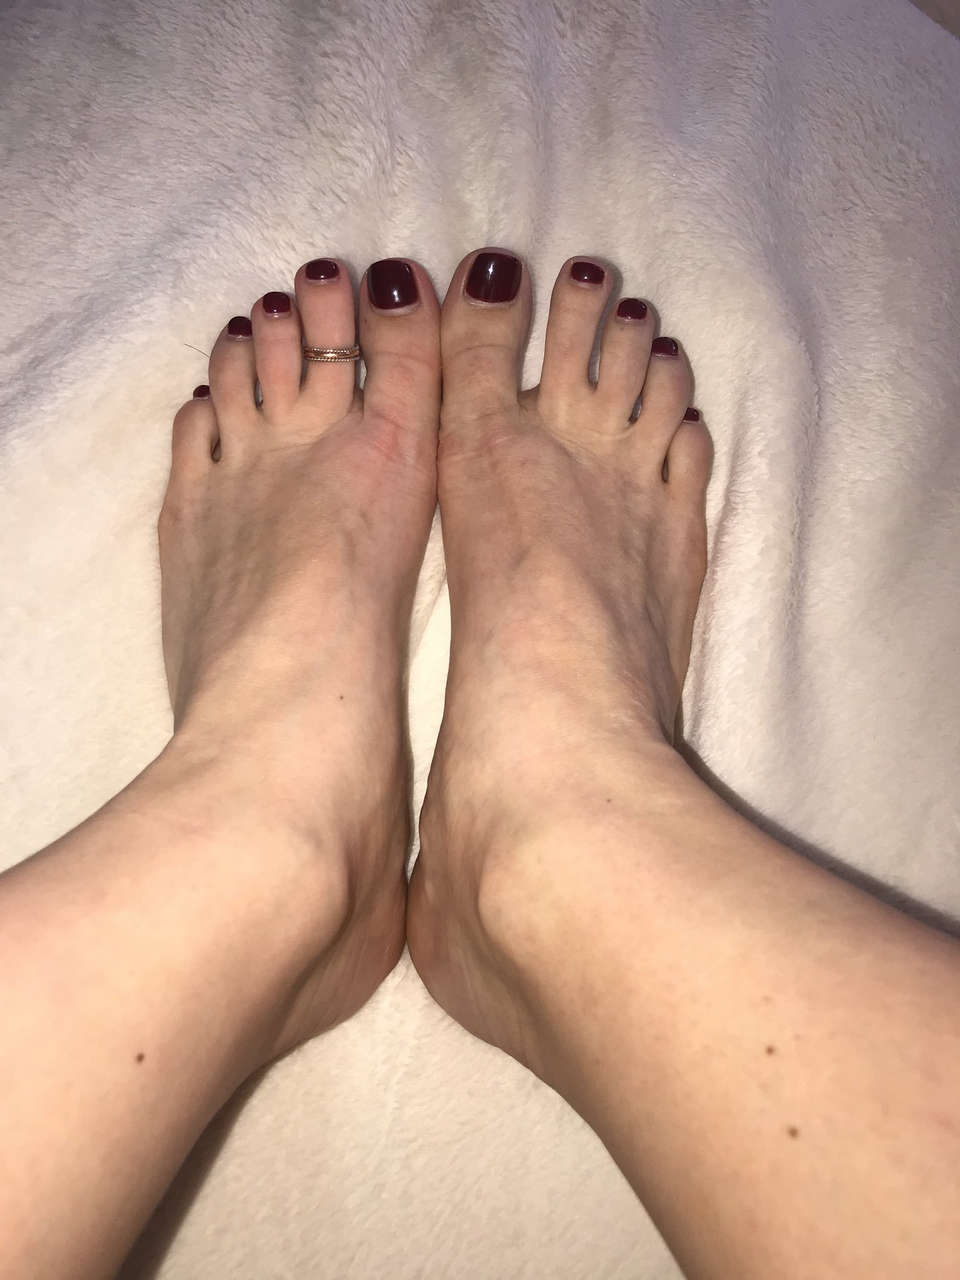 Lisey Sweet Feet